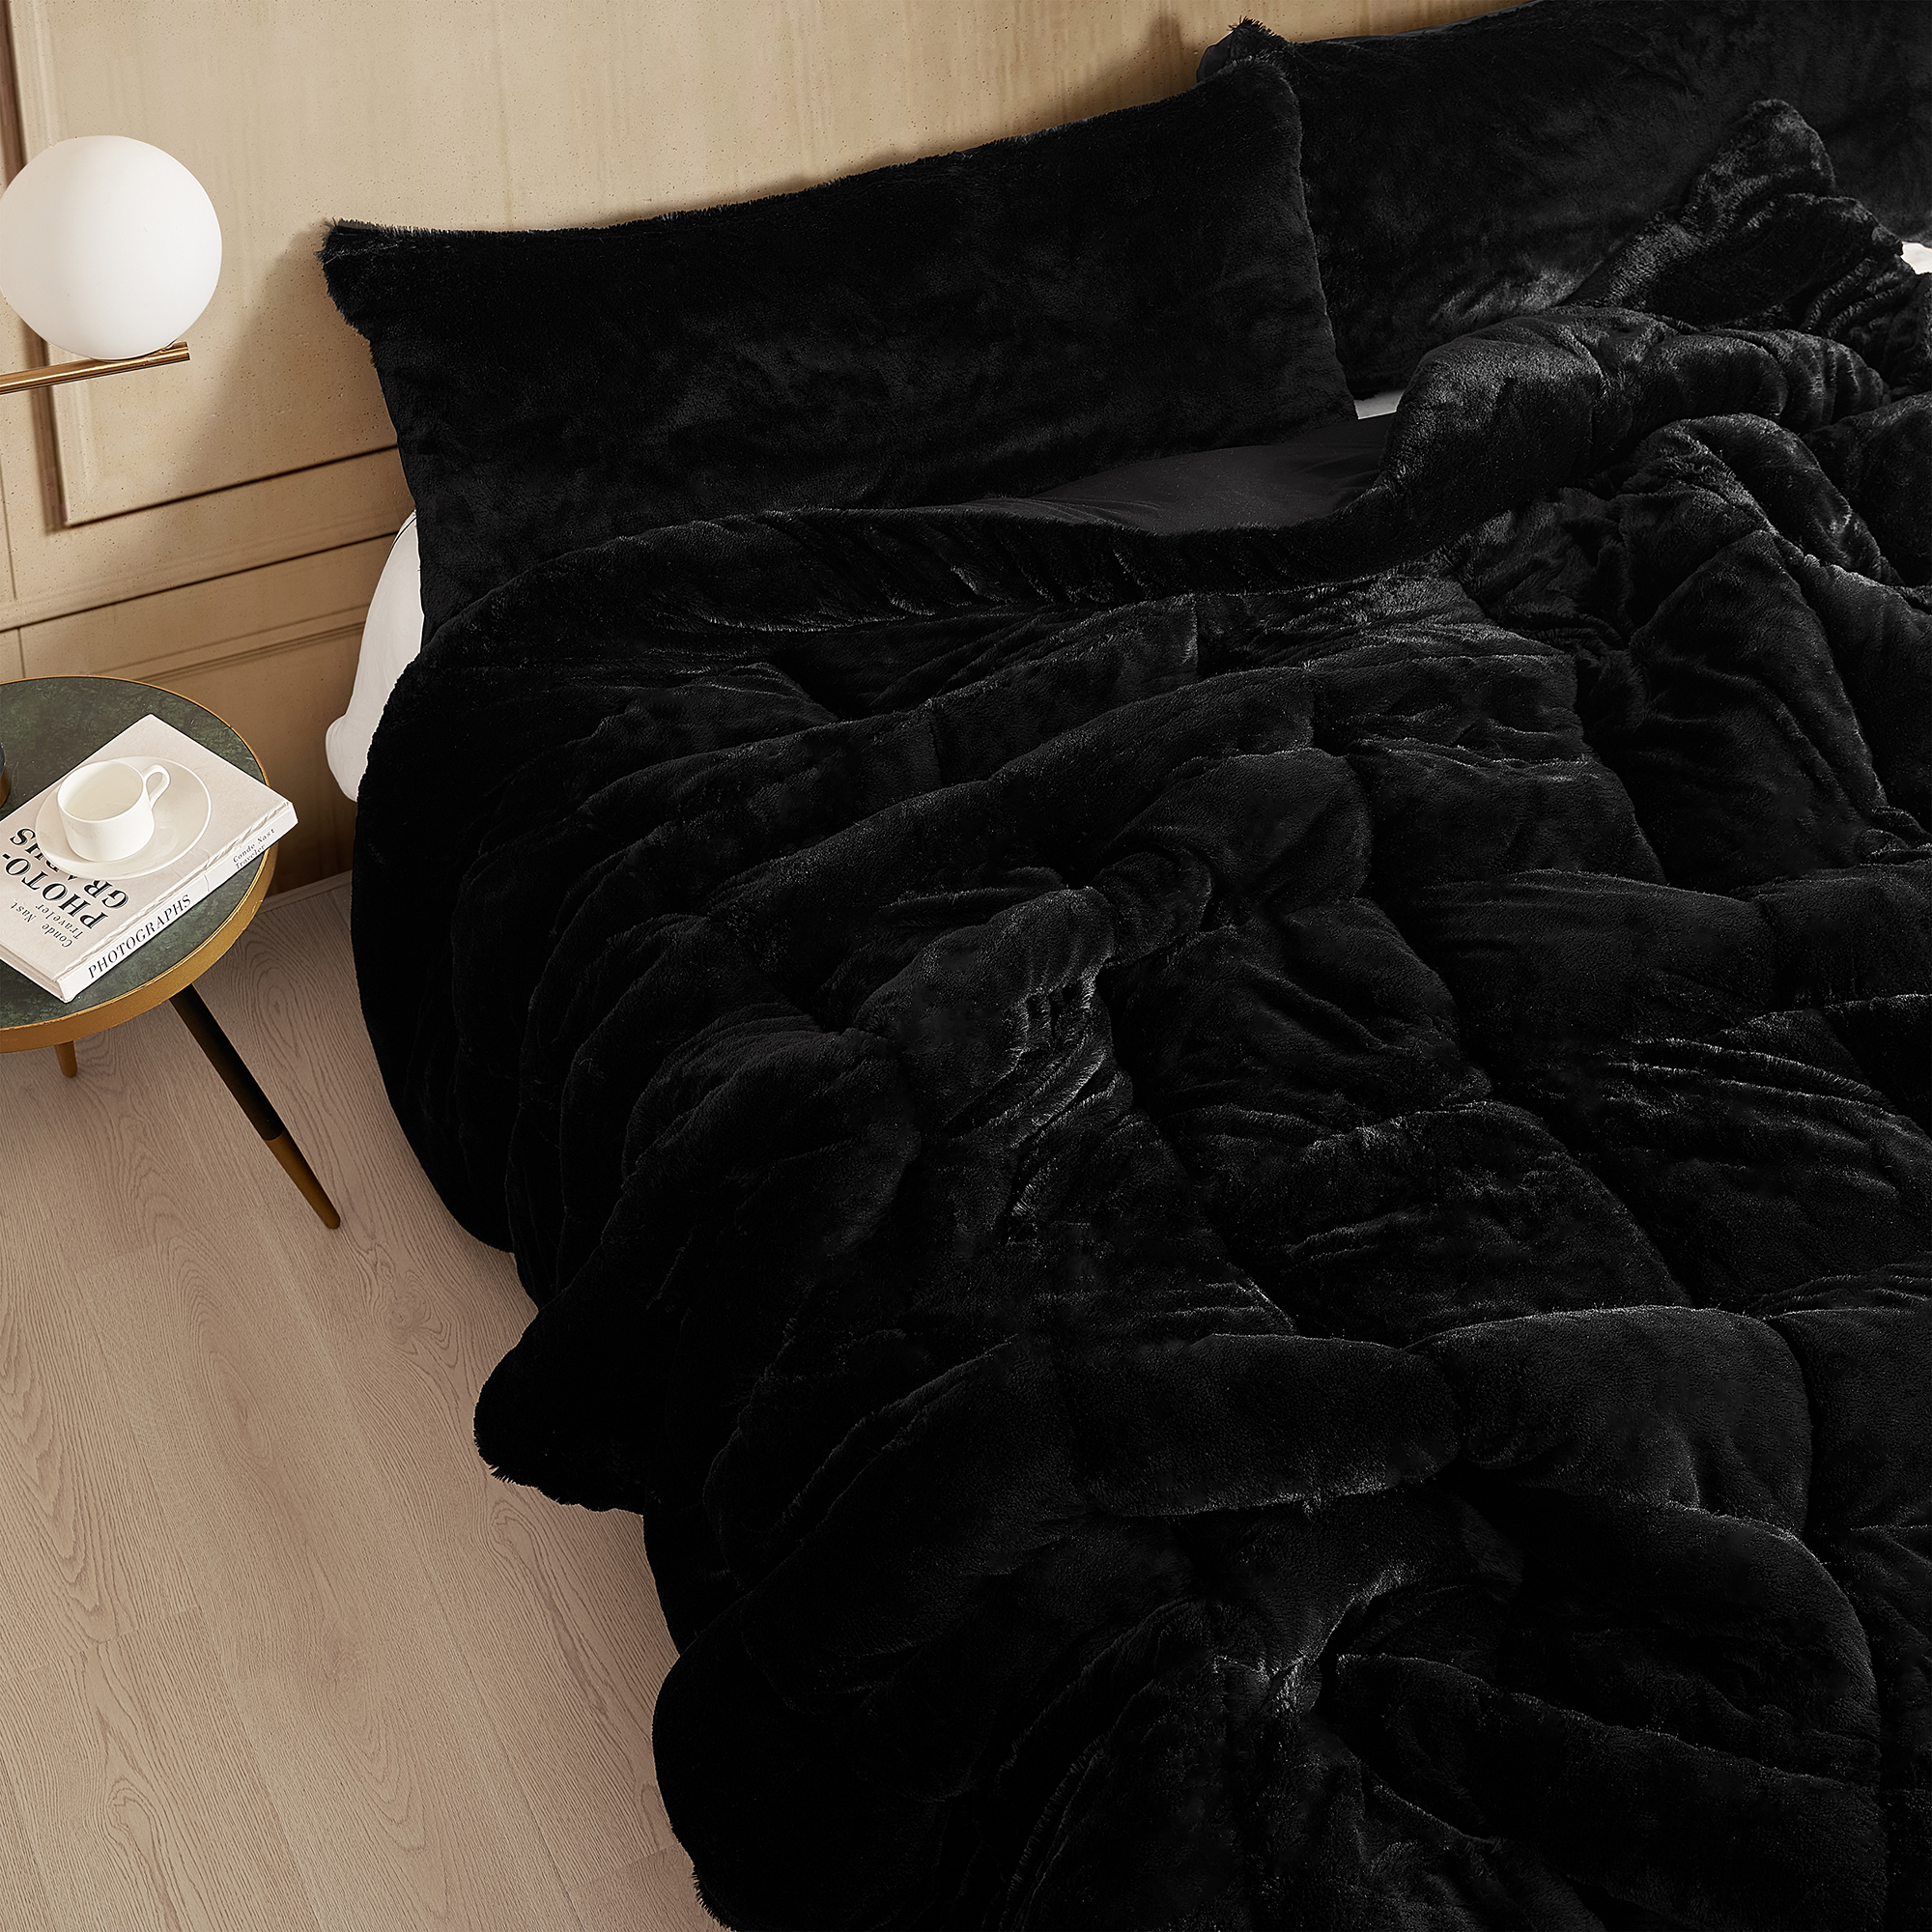 Are You Kidding Bare - Coma Inducer Oversized Comforter - Black